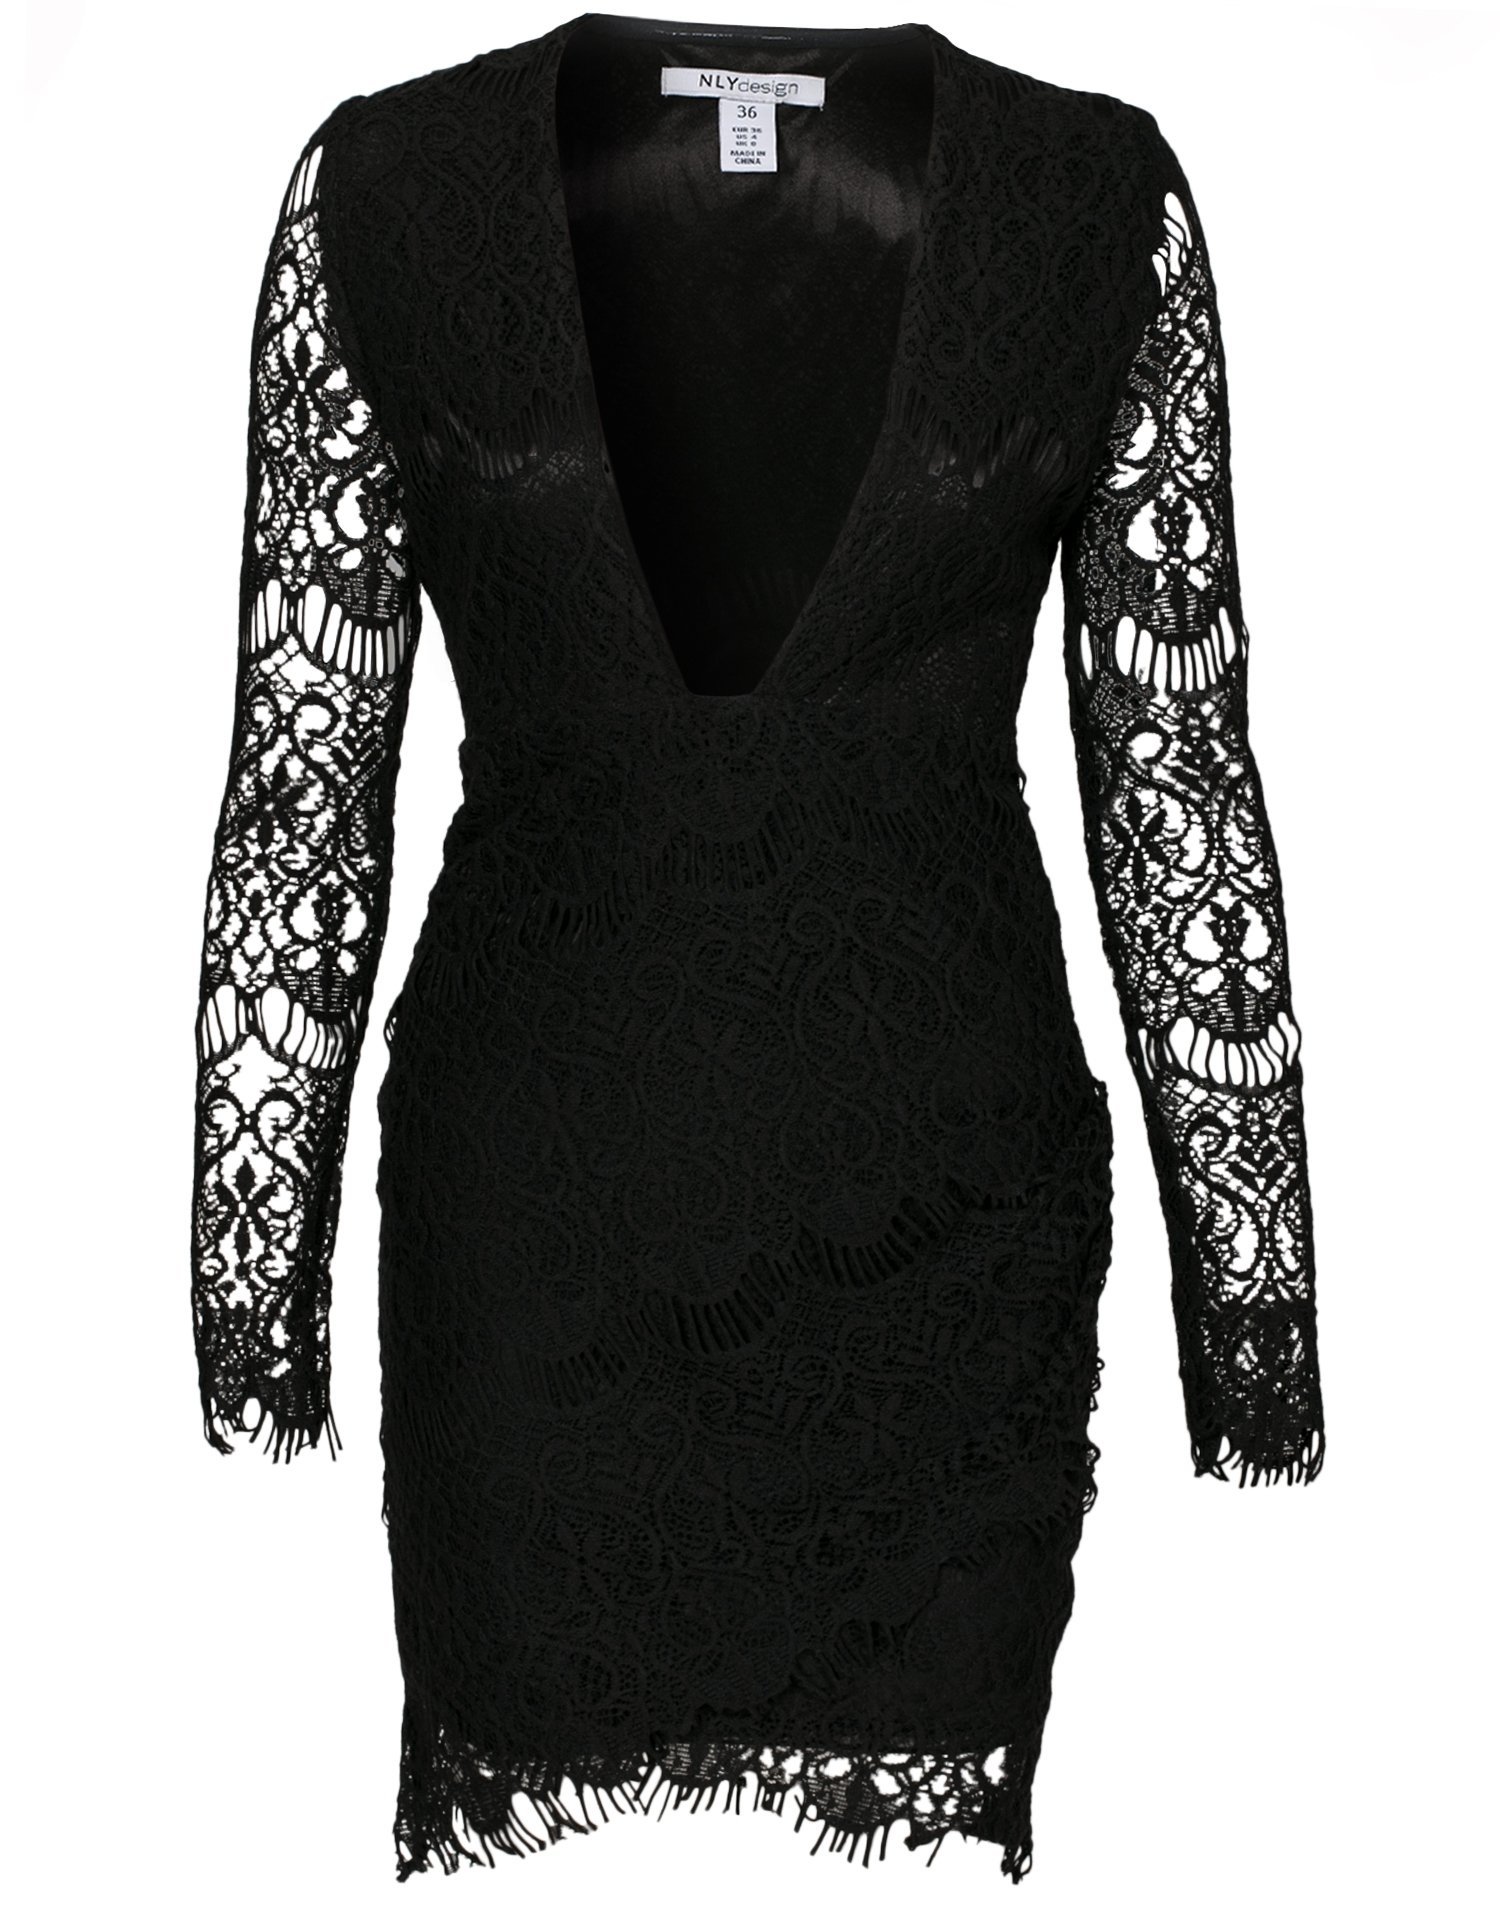 Deep V - Front Lace Dress - Nly Design - Black - Party Dresses ...